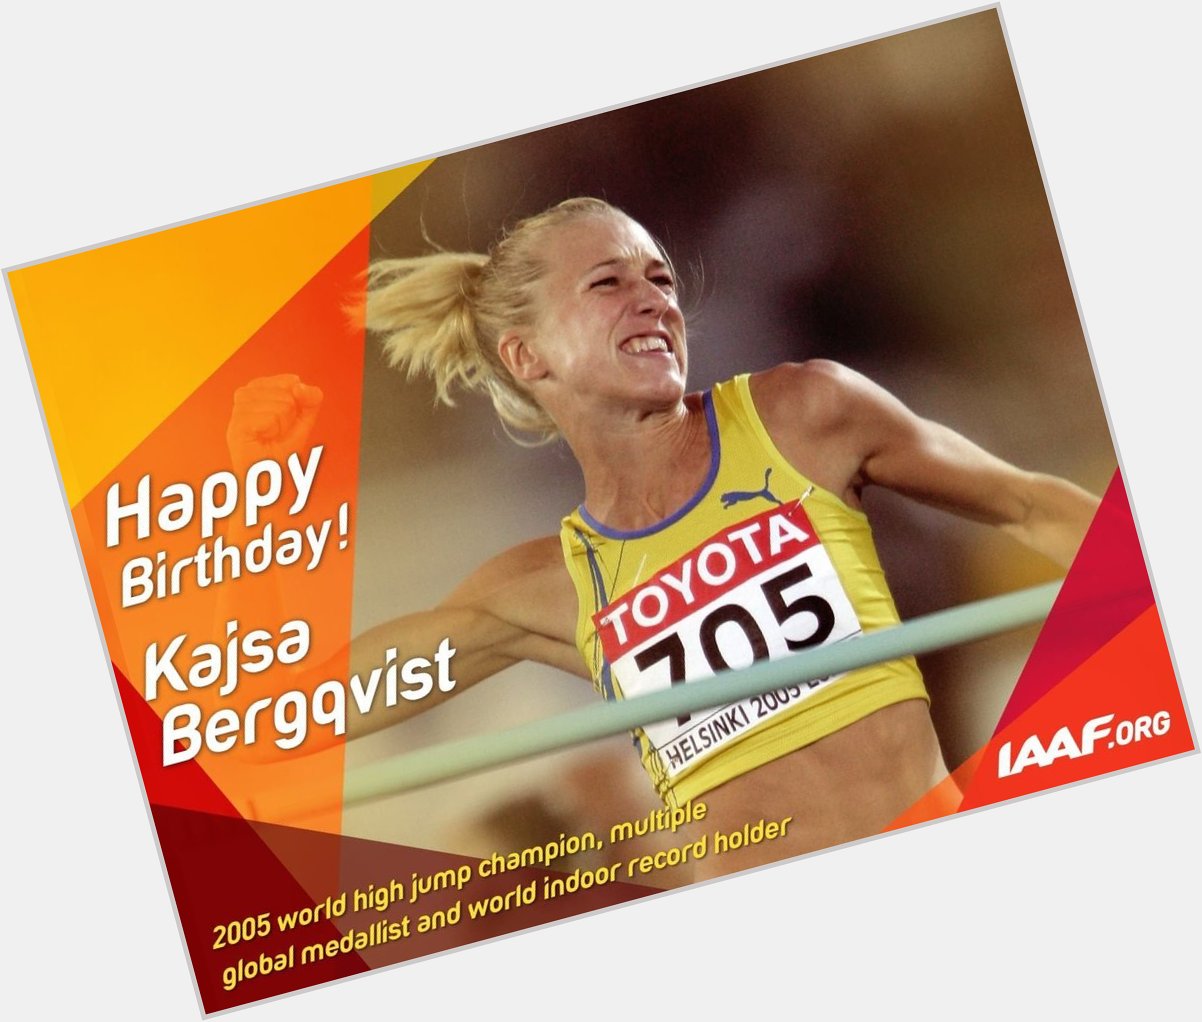 Happy birthday to the great Kajsa Bergqvist! 
More:  